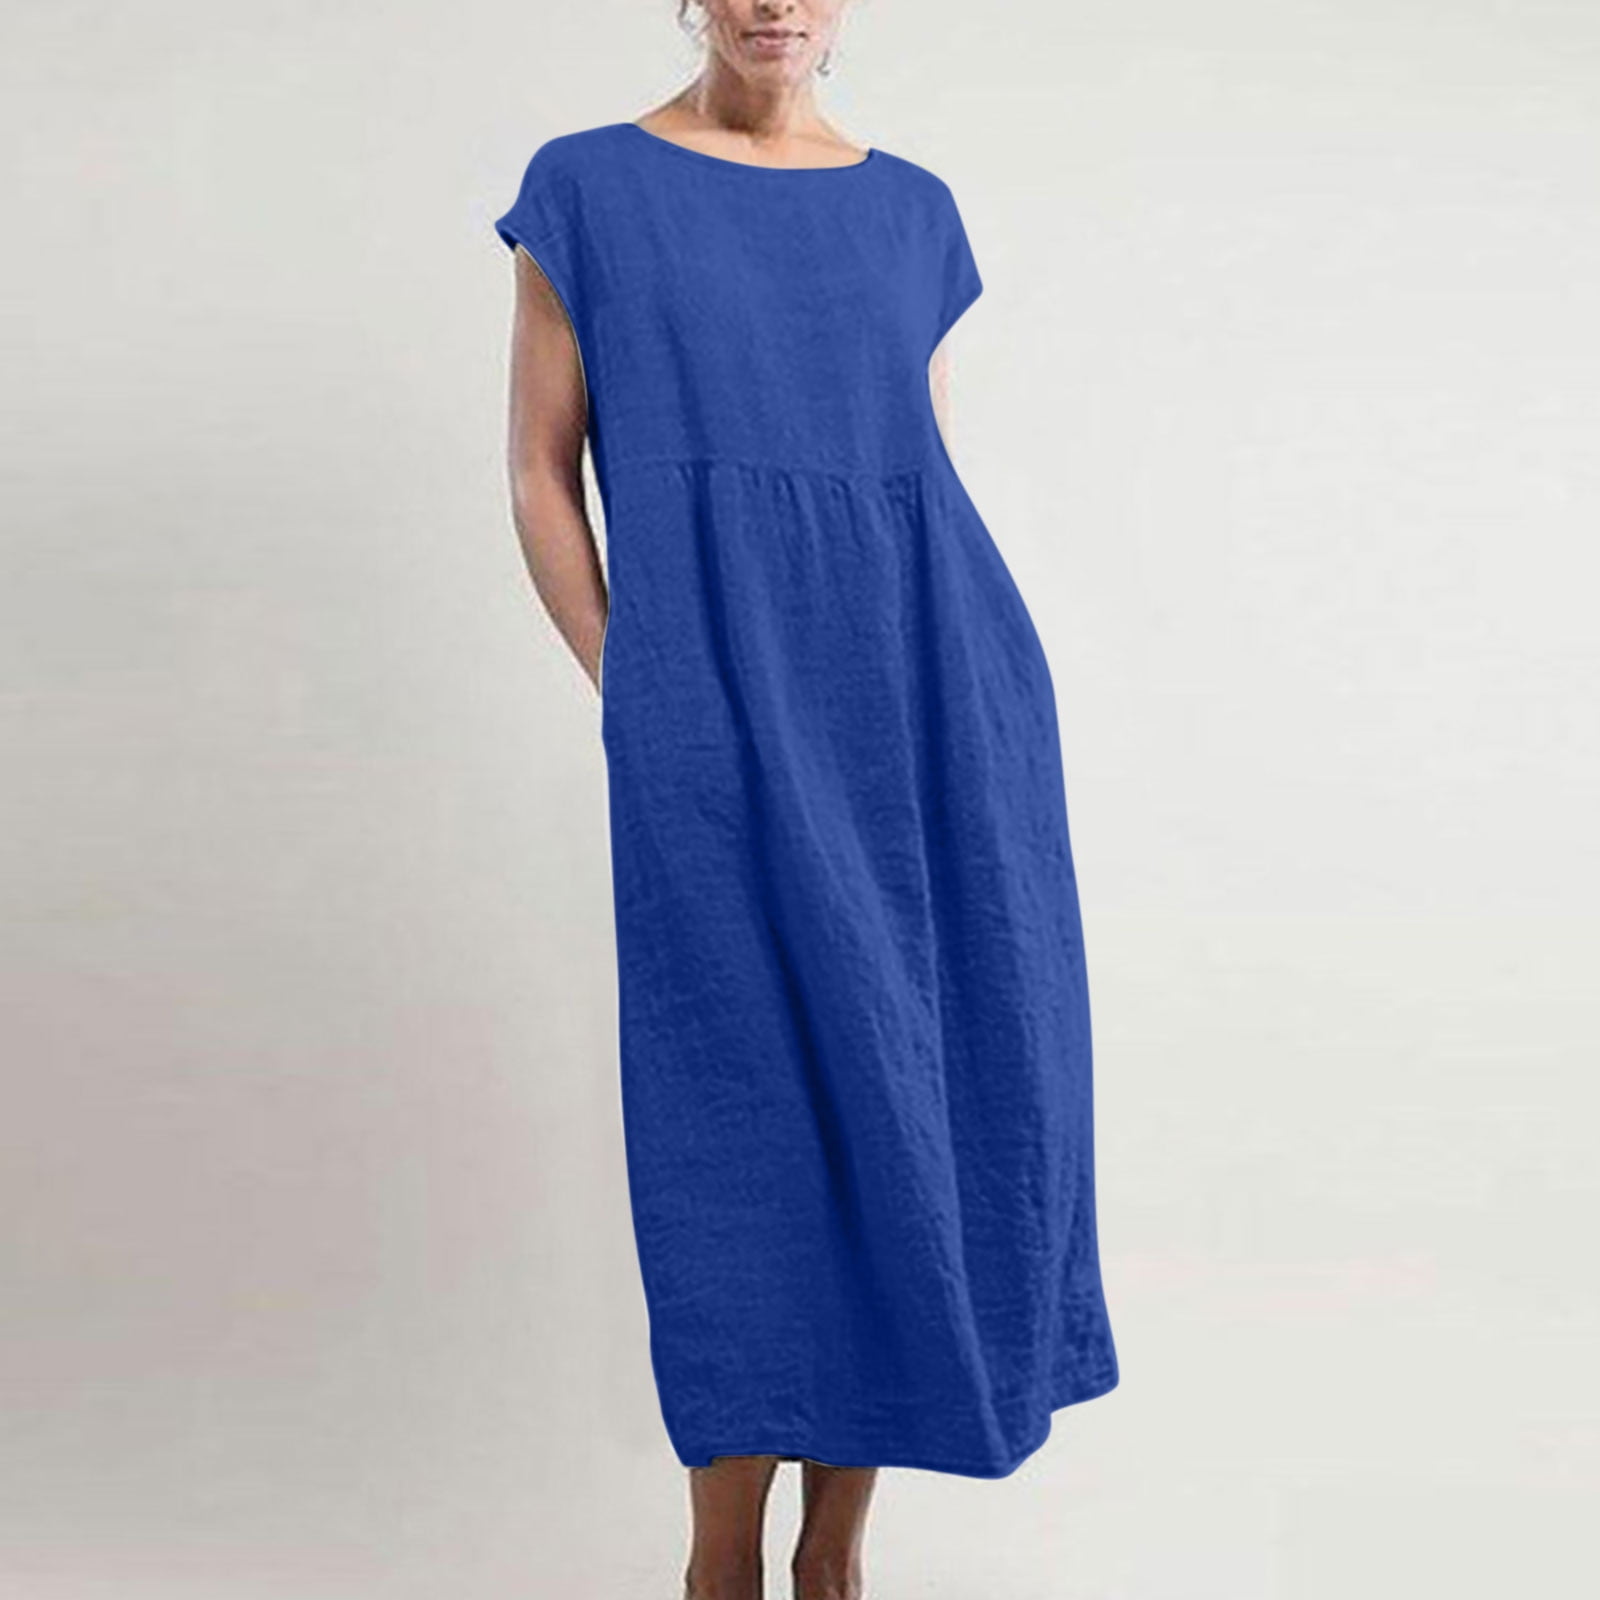 Homenesgenics Summer Dresses for Women Clearance under $10 Plus Size ...